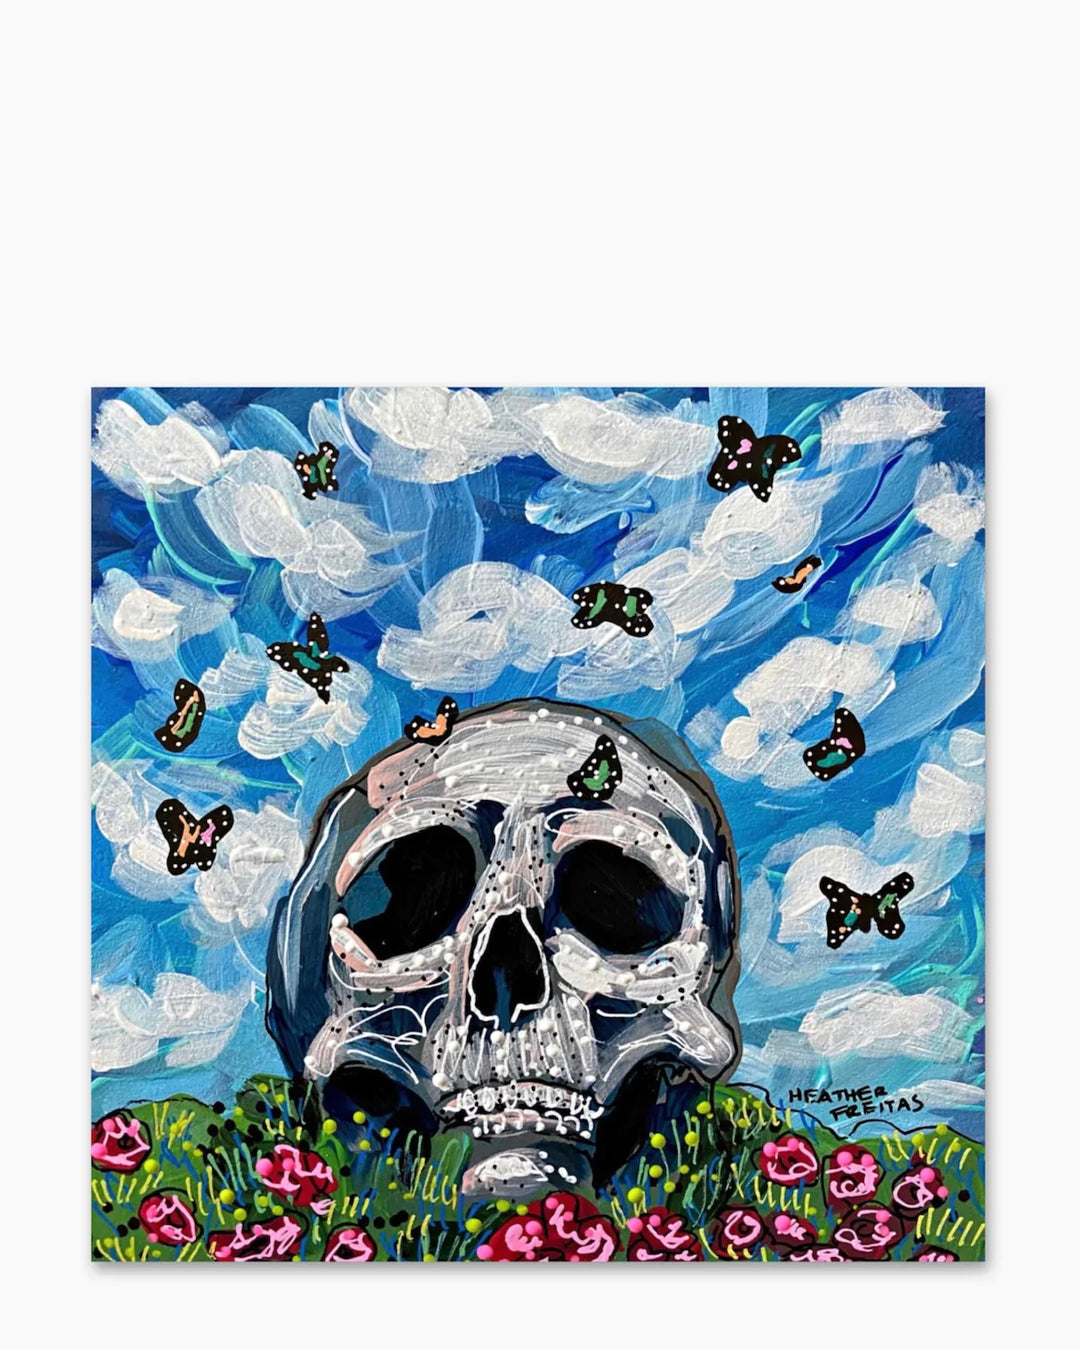 Blue Horizon & Butterflies Skull - Heather Freitas 